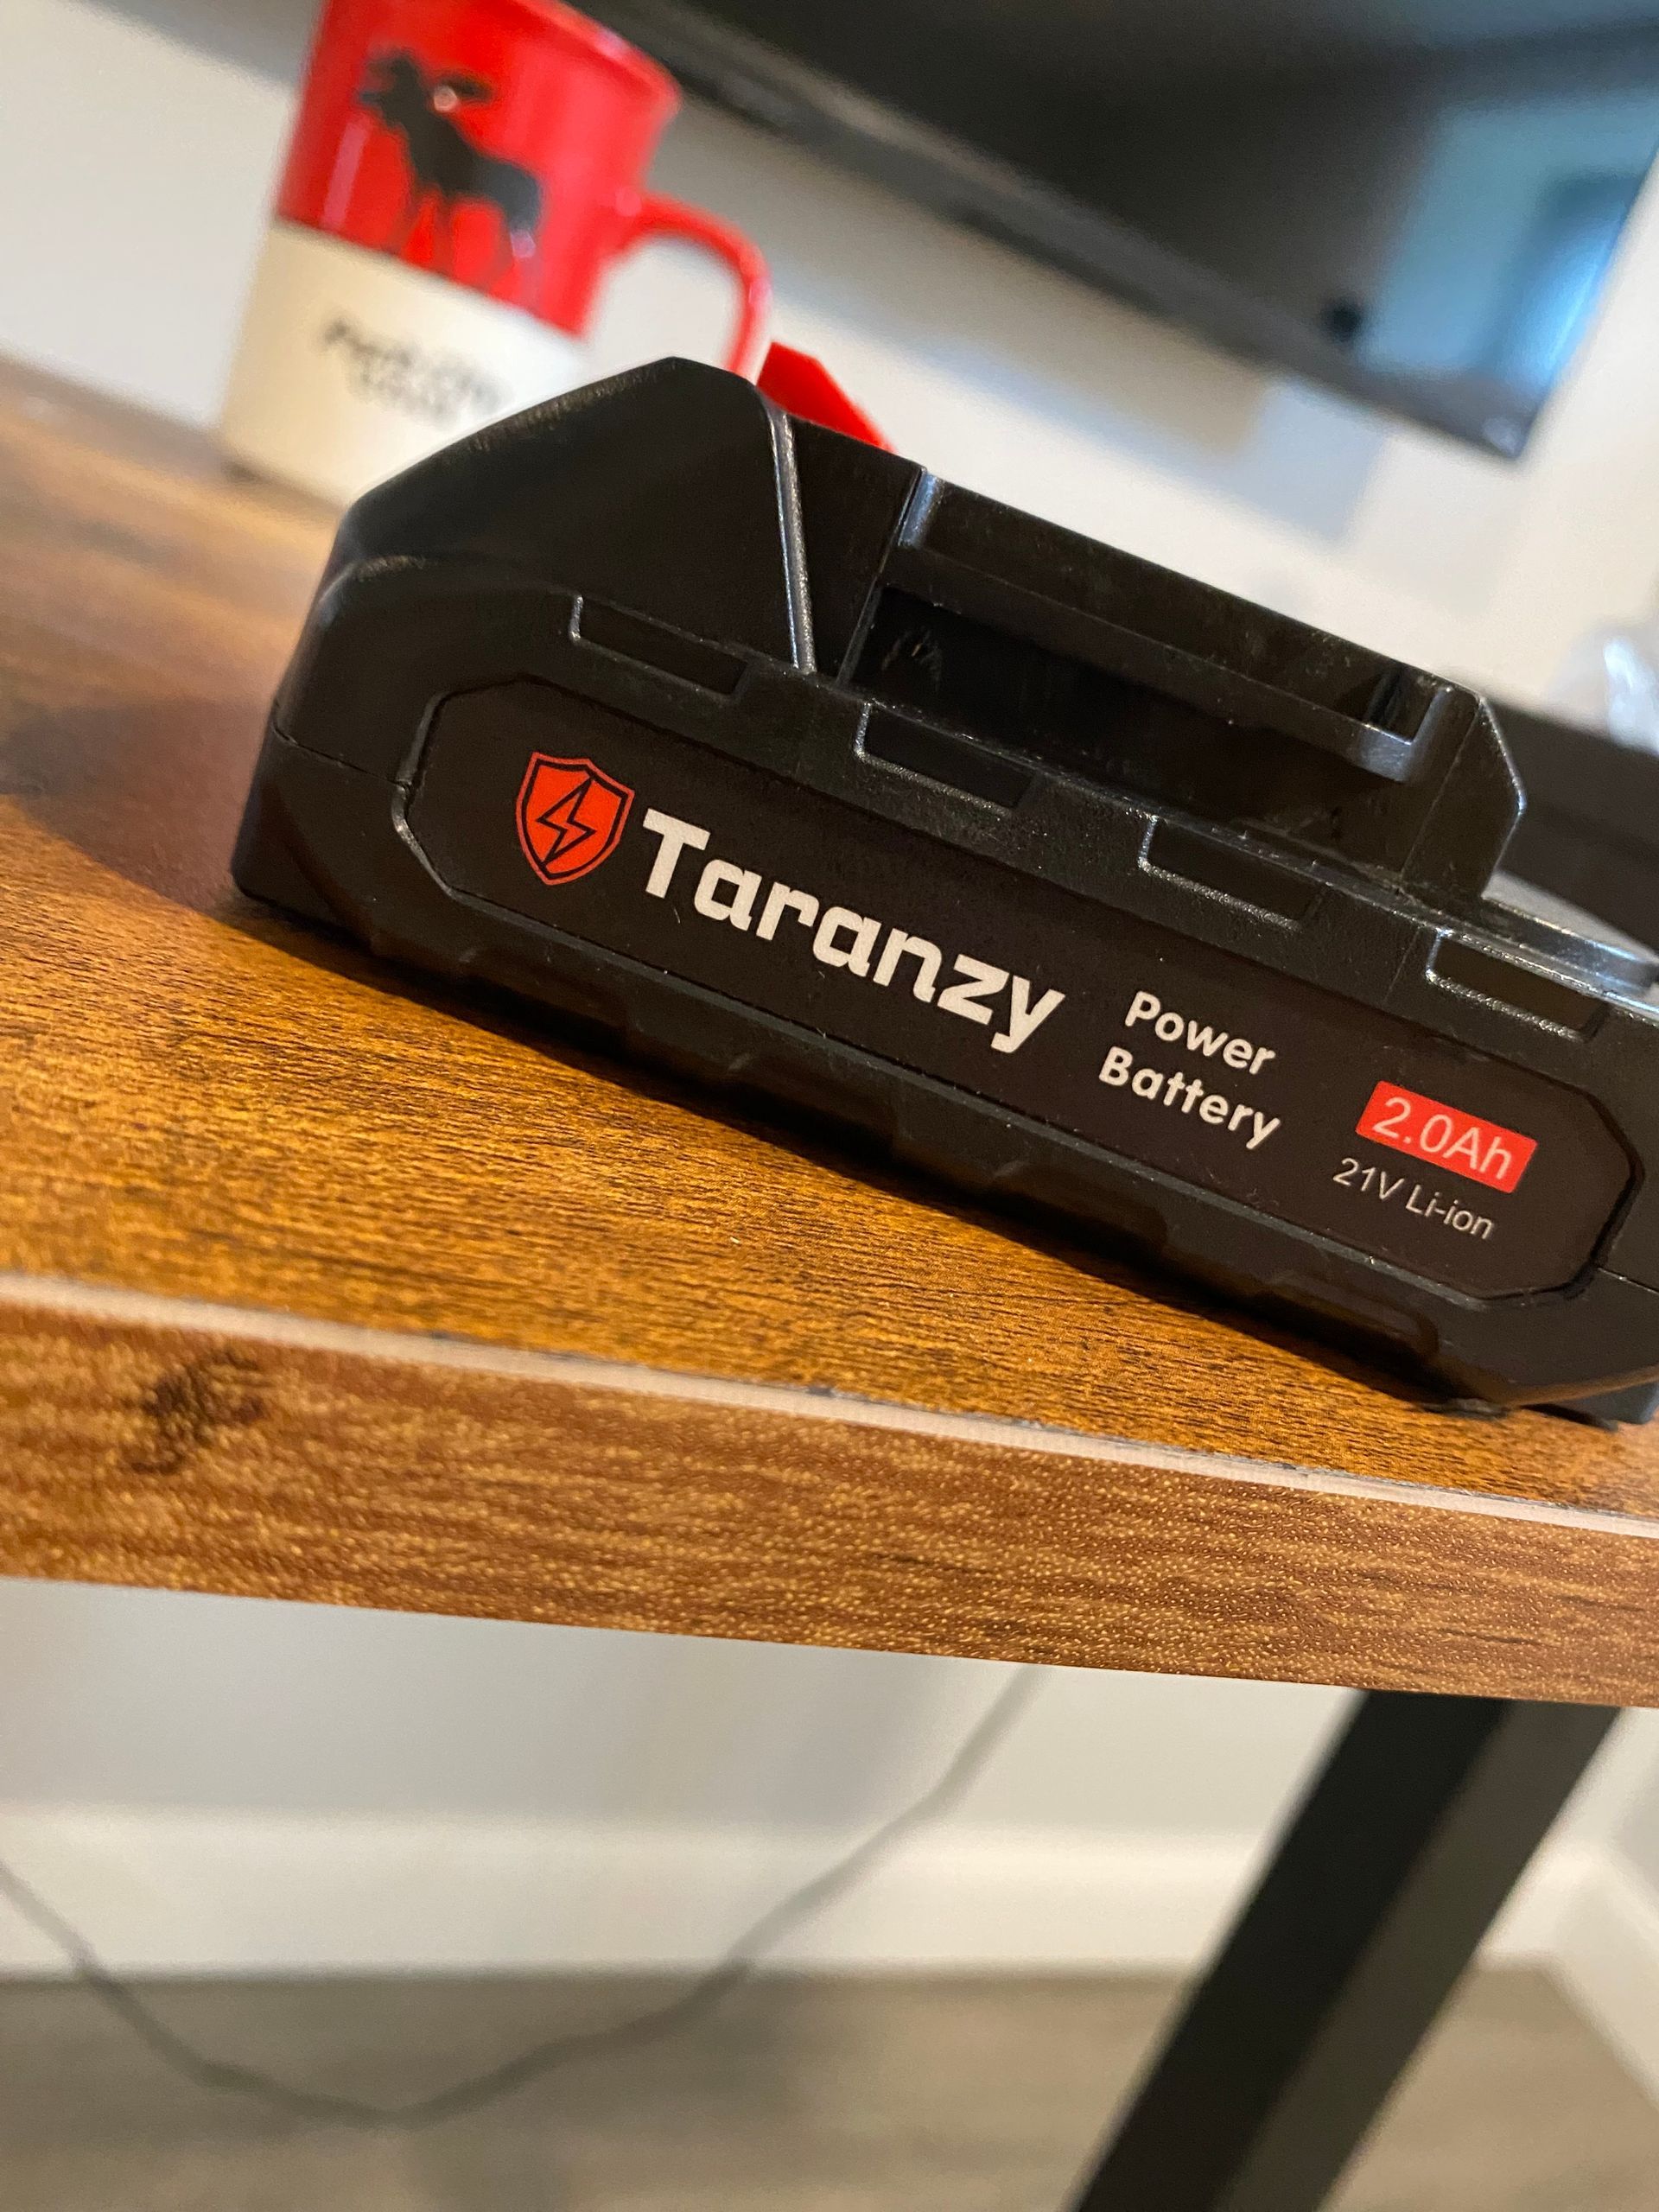 taranzy 2.0Ah battery